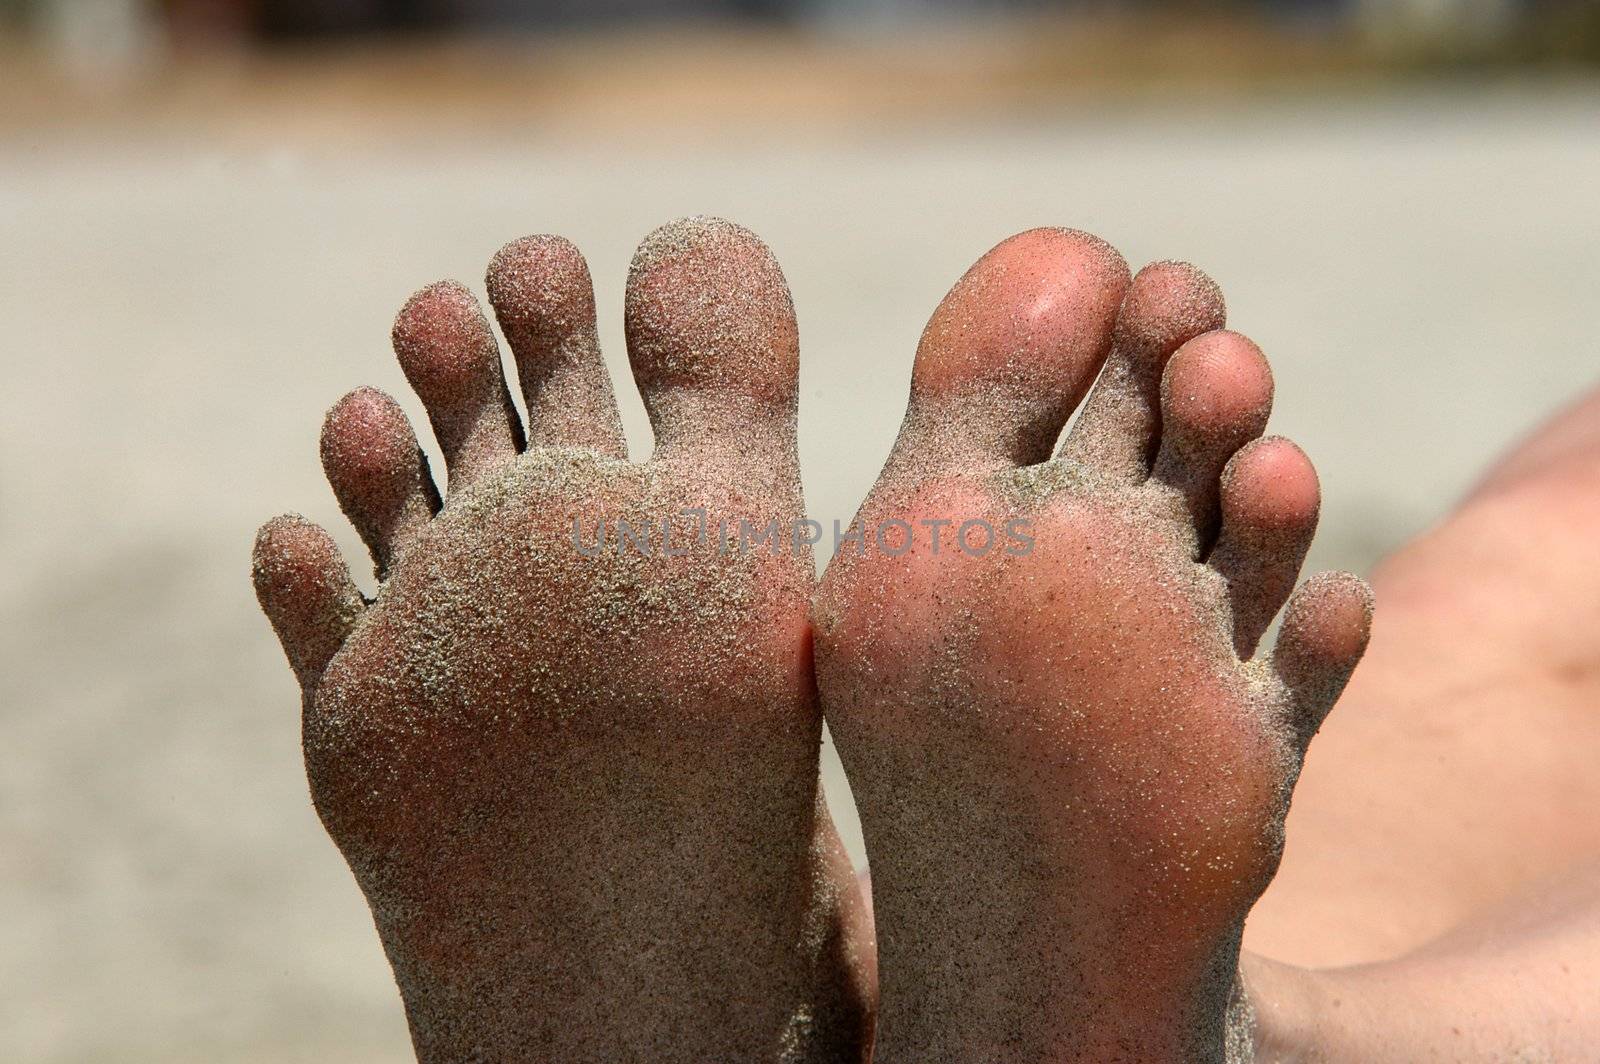 Feet of woman lying on the beach